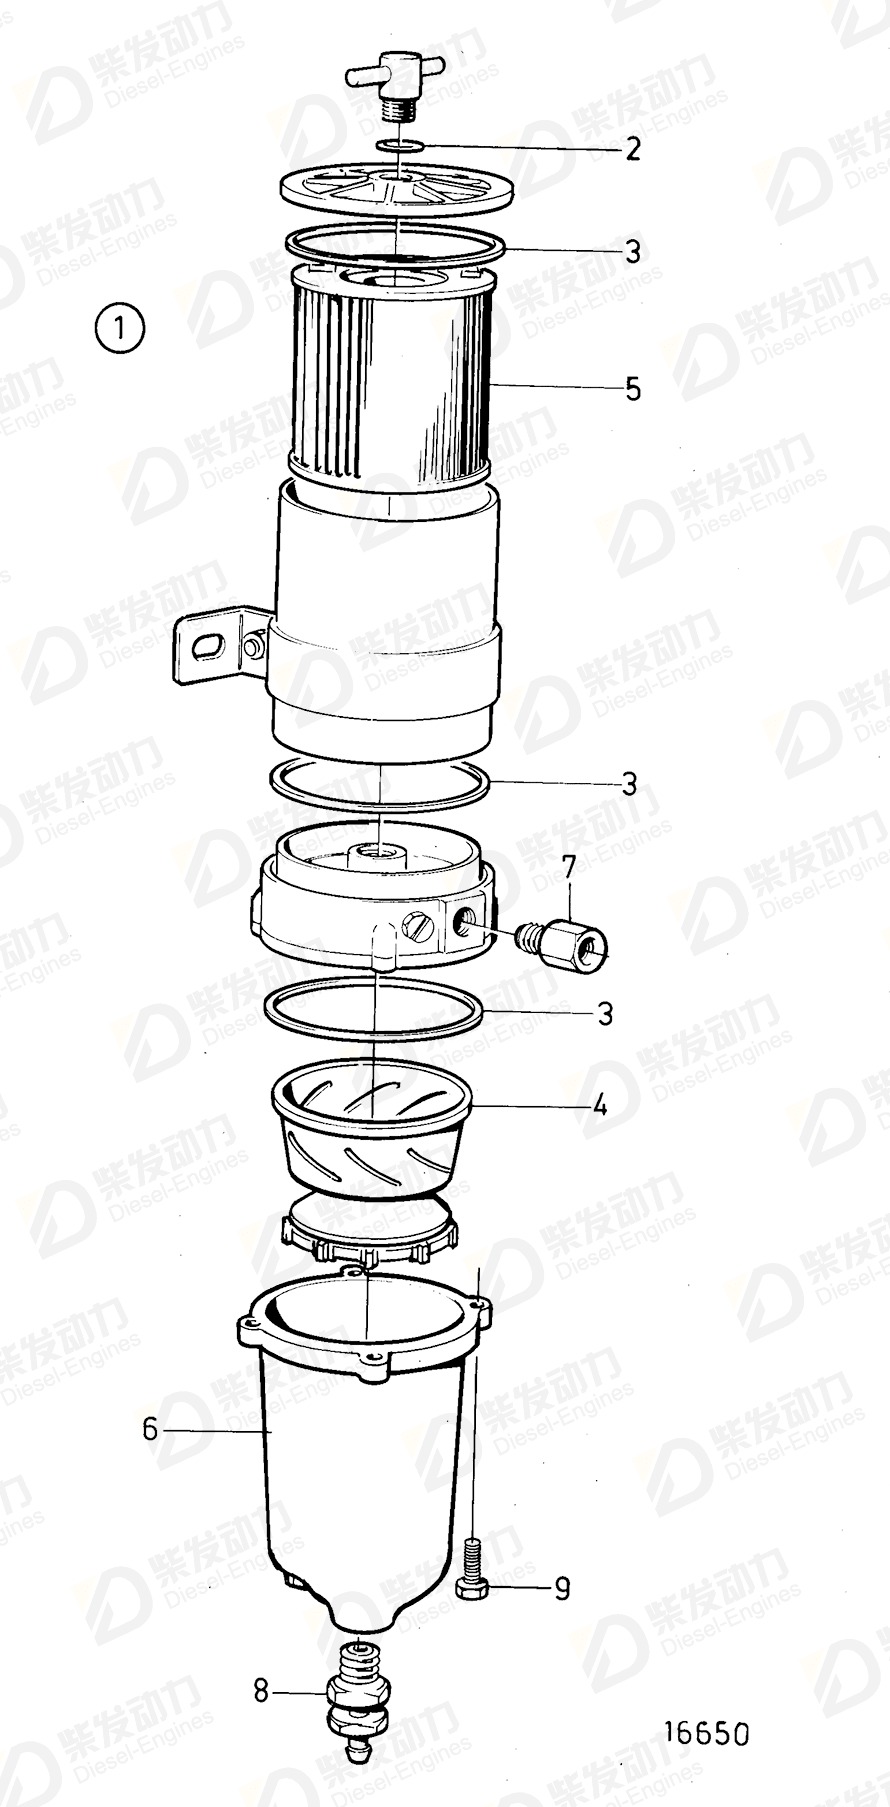 VOLVO Fuel filter kit 877769 Drawing